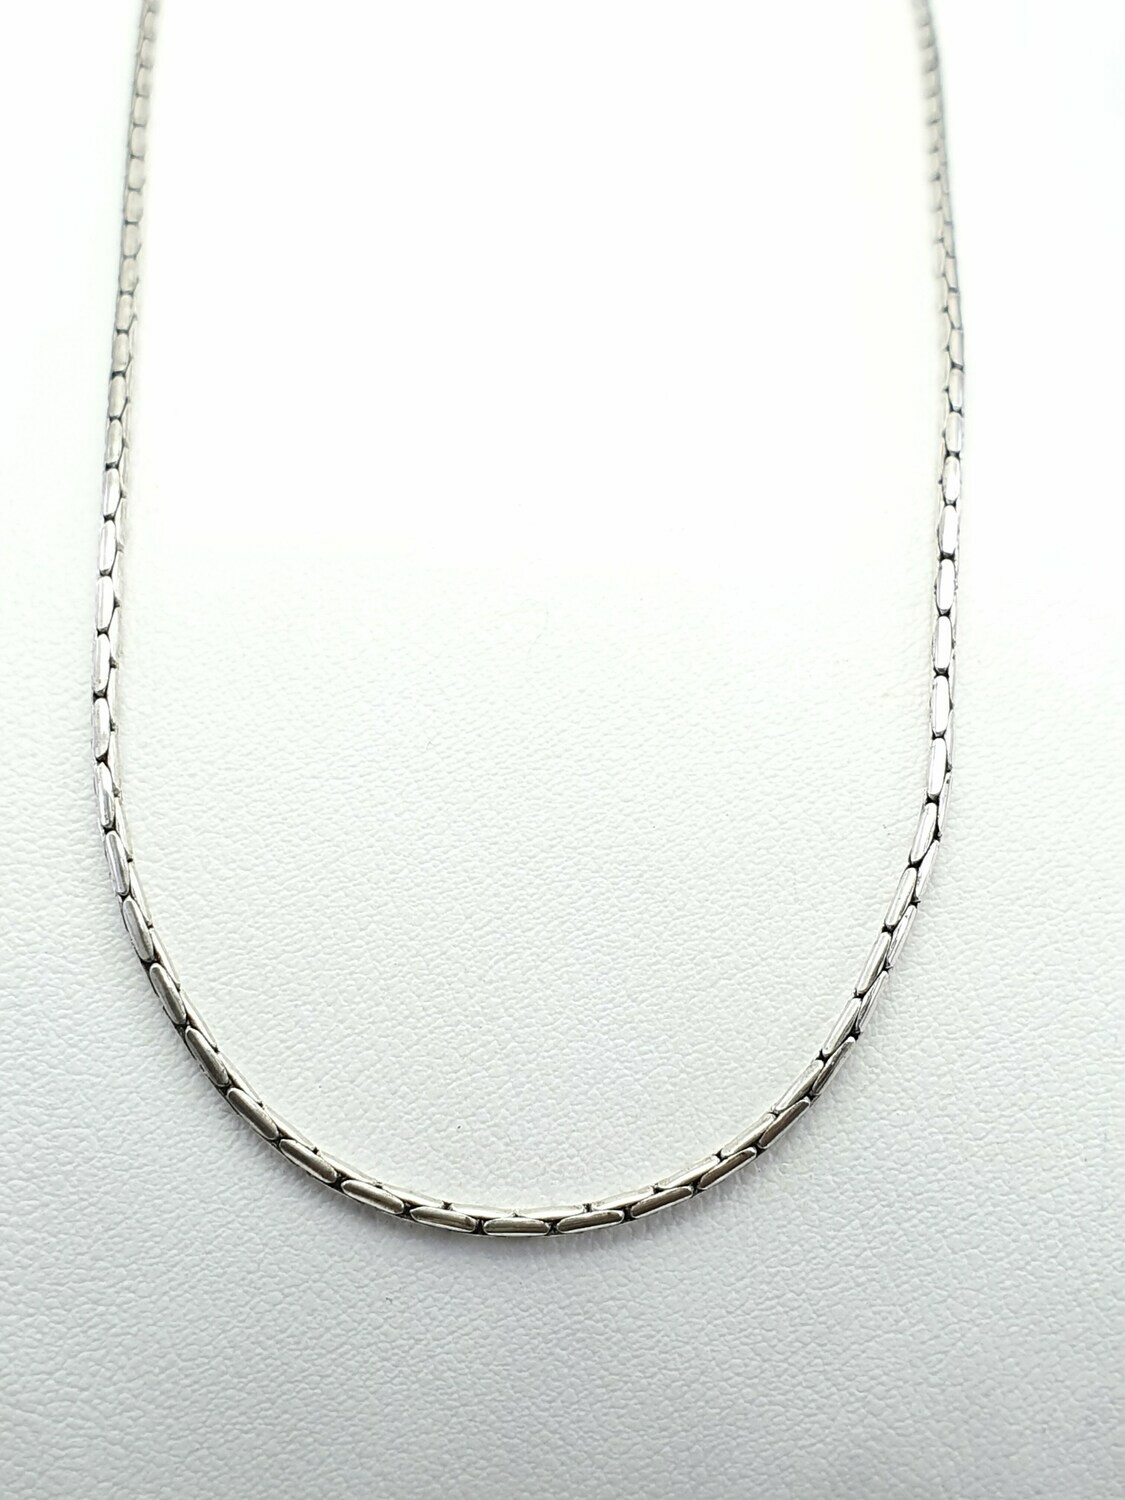 Silver chain 50cm